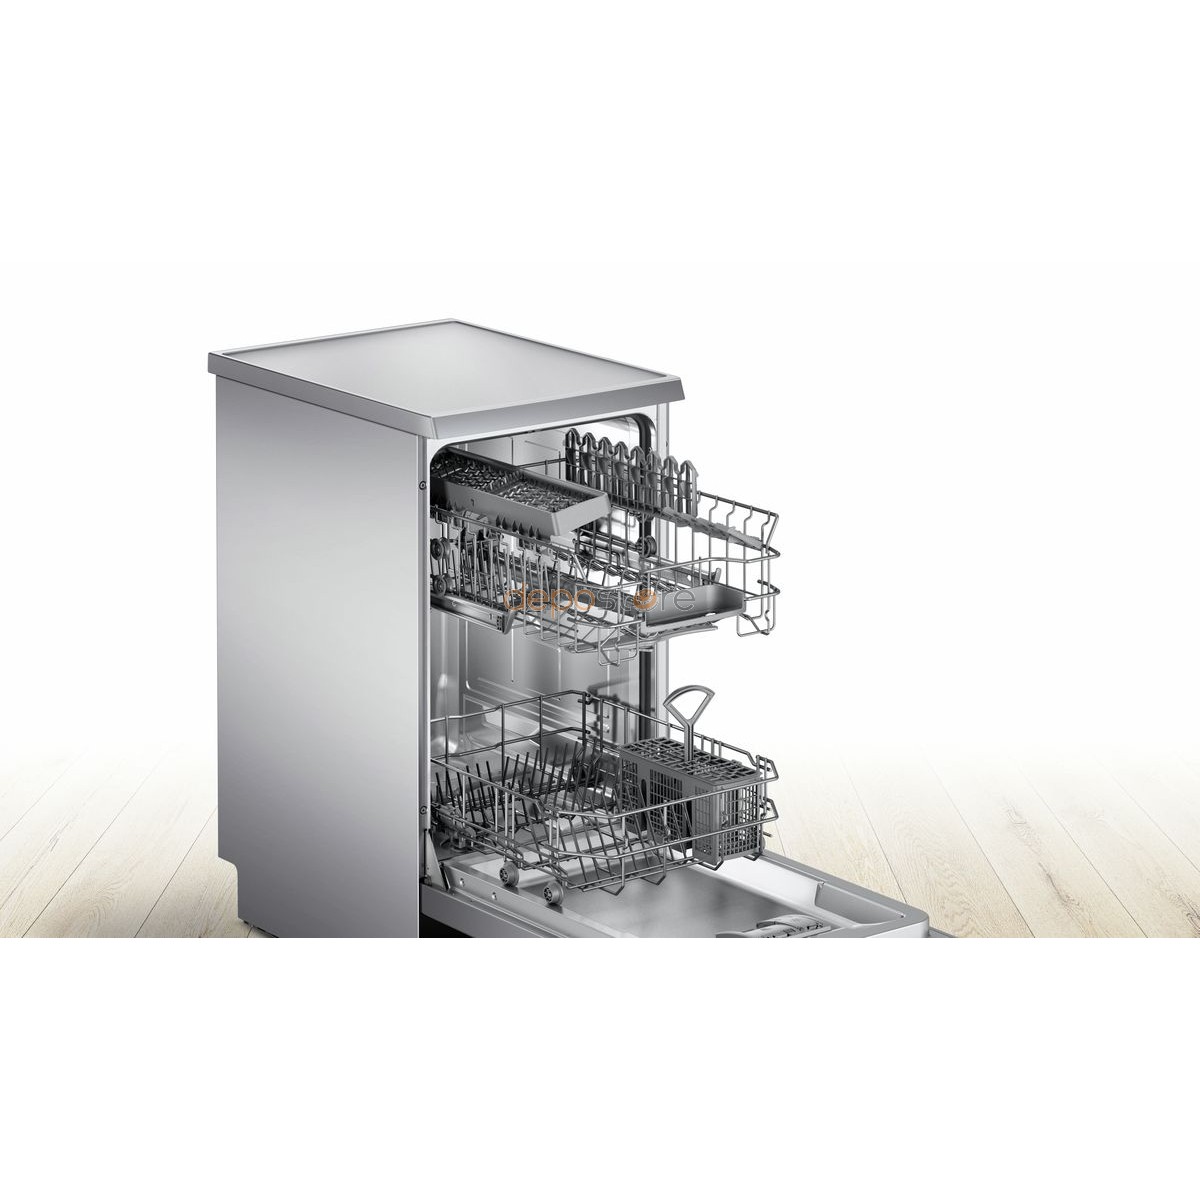 Посудомоечная машина на 12. Посудомоечная машина Bosch sps25cw01r. Посудомоечная машина Bosch sps25fw12r. Посудомойка Bosch SPS 25dw03r. Посудомоечная машина Bosch SPS 25ci00 e.